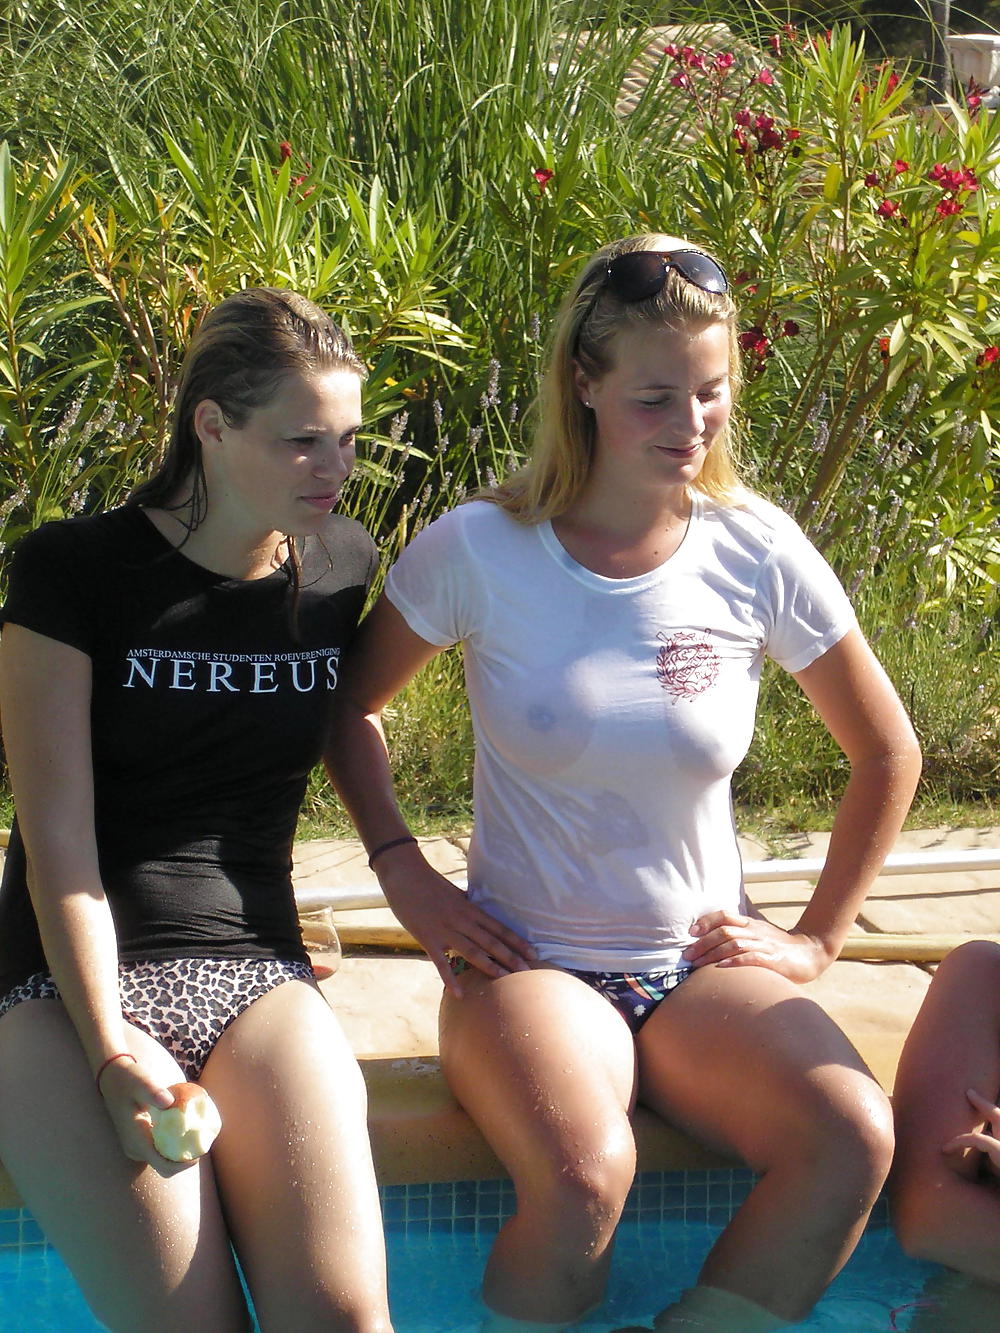 Dutch teen girls pool party adult photos